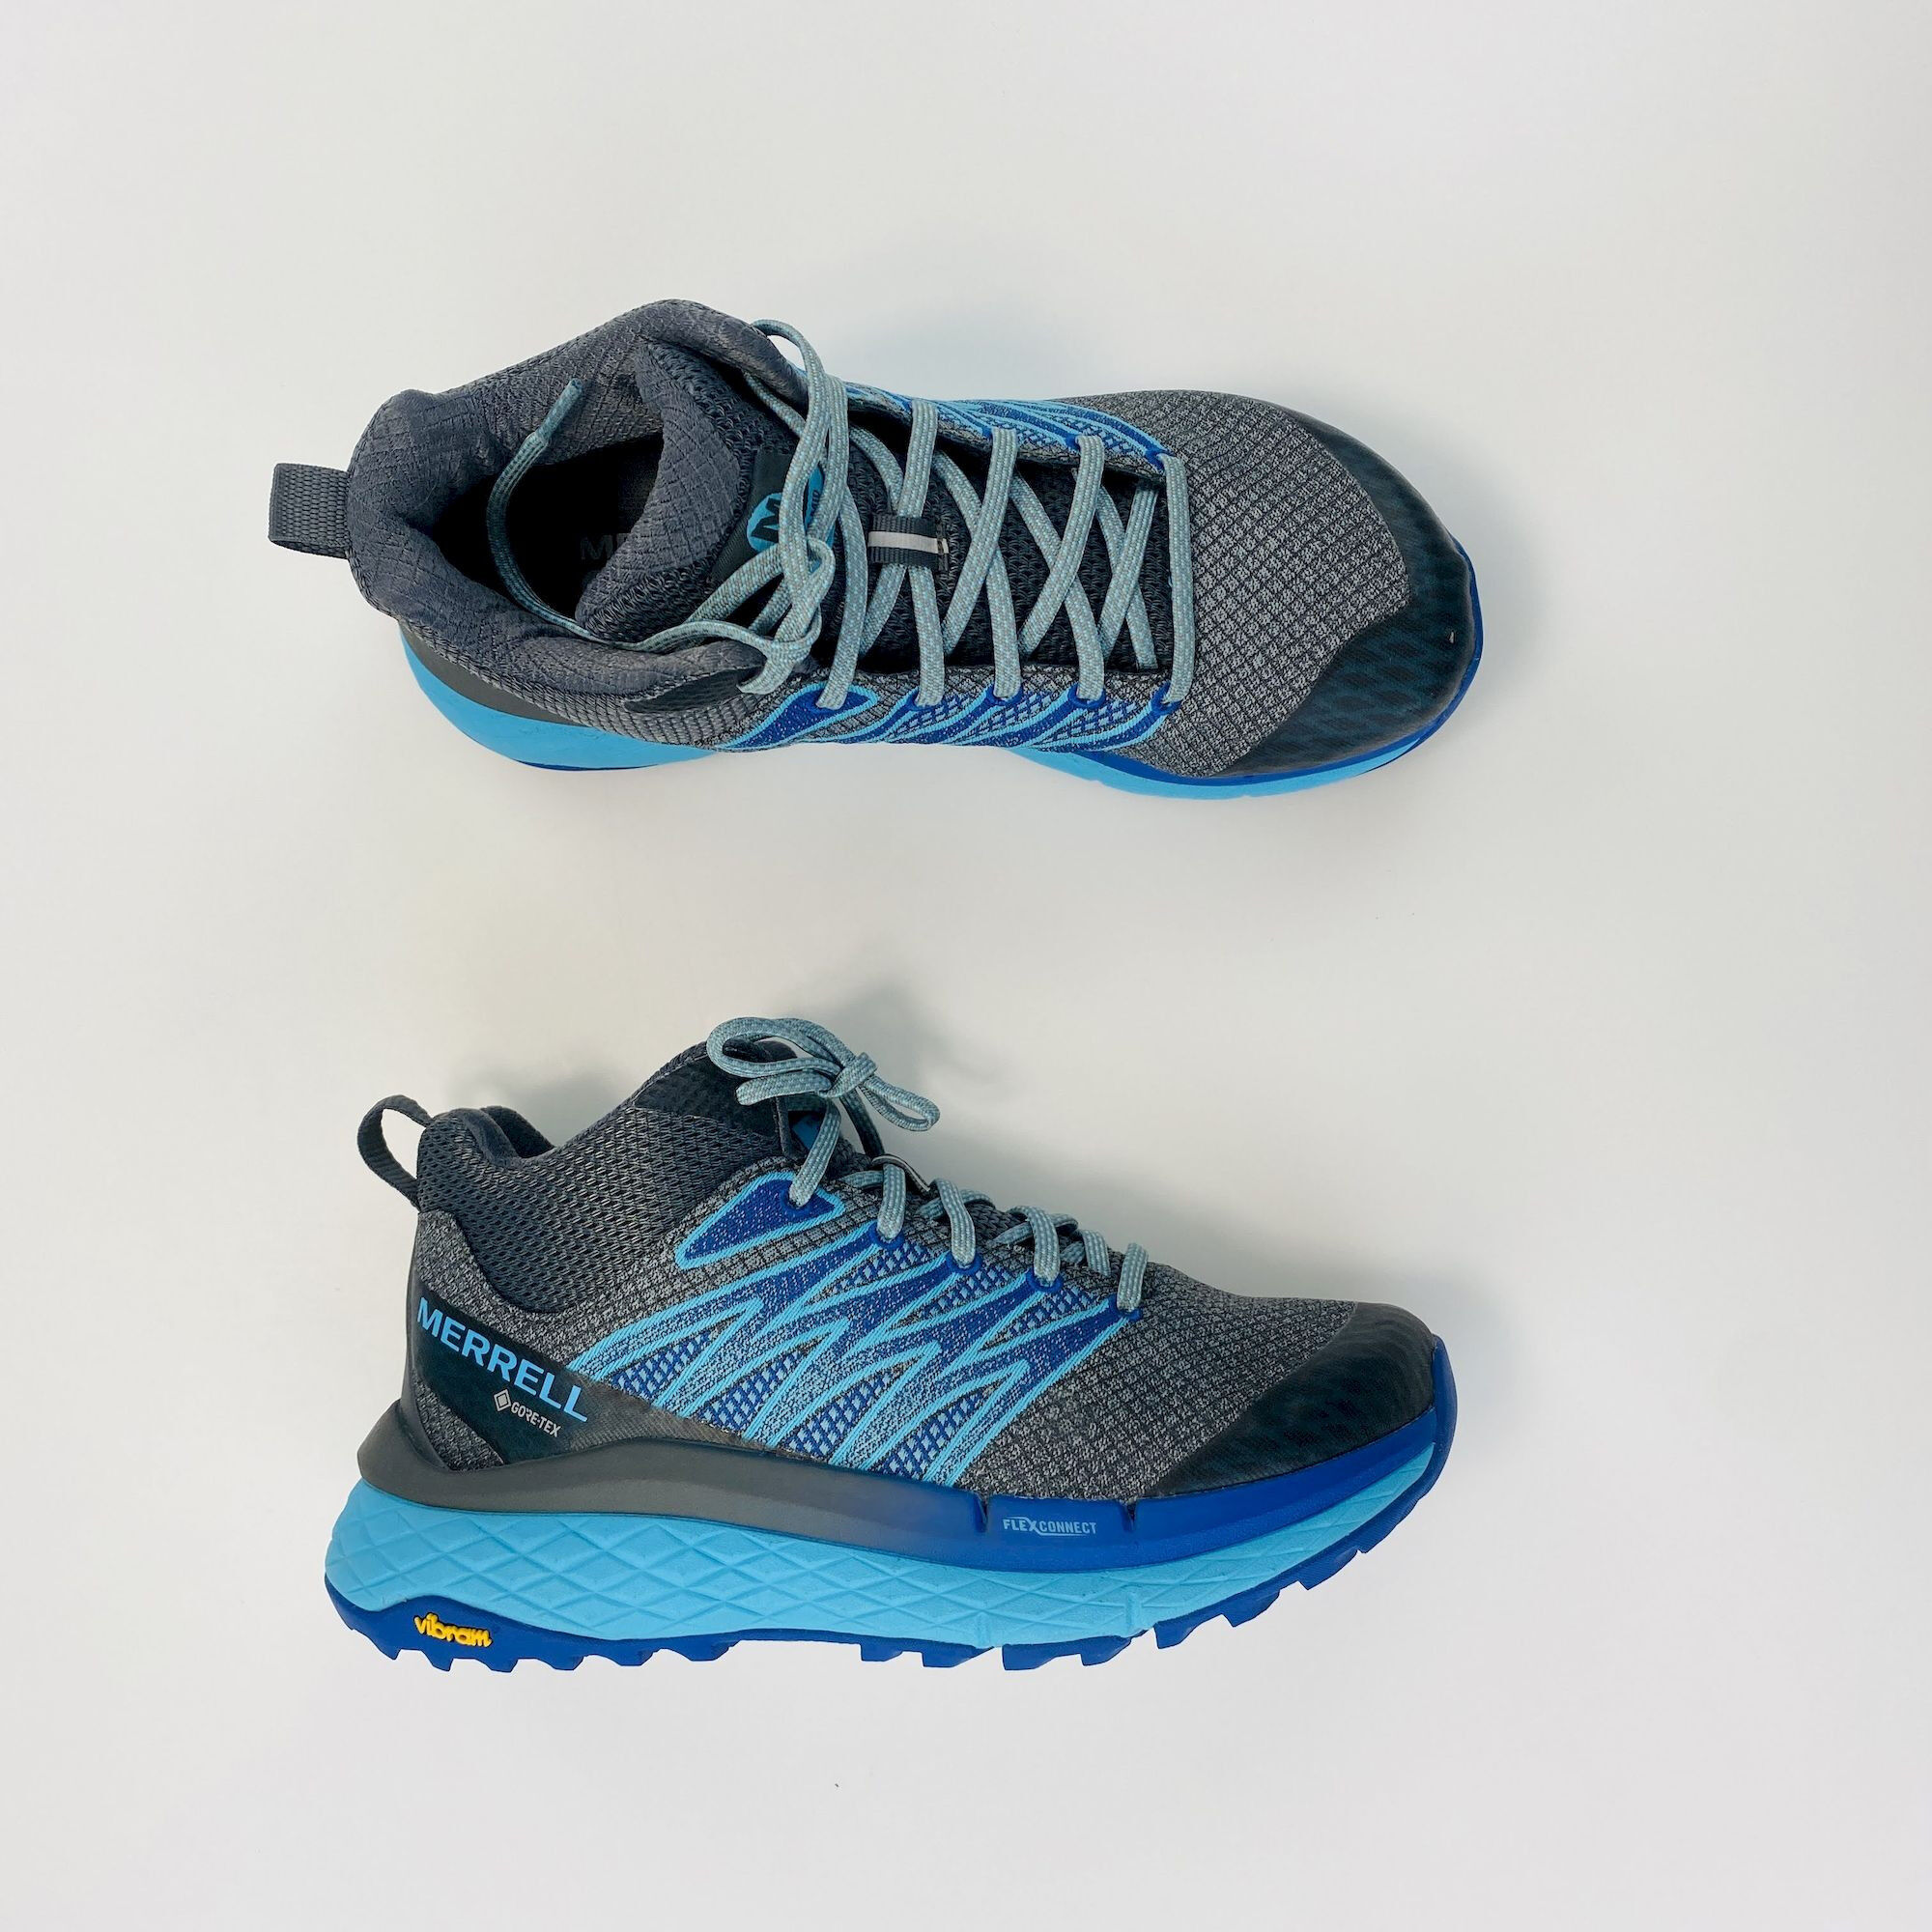 Merrell Chaussures randonnée Mid - Second Hand Buty turystyczne damskie - Gris/Bleu - 37.5 | Hardloop